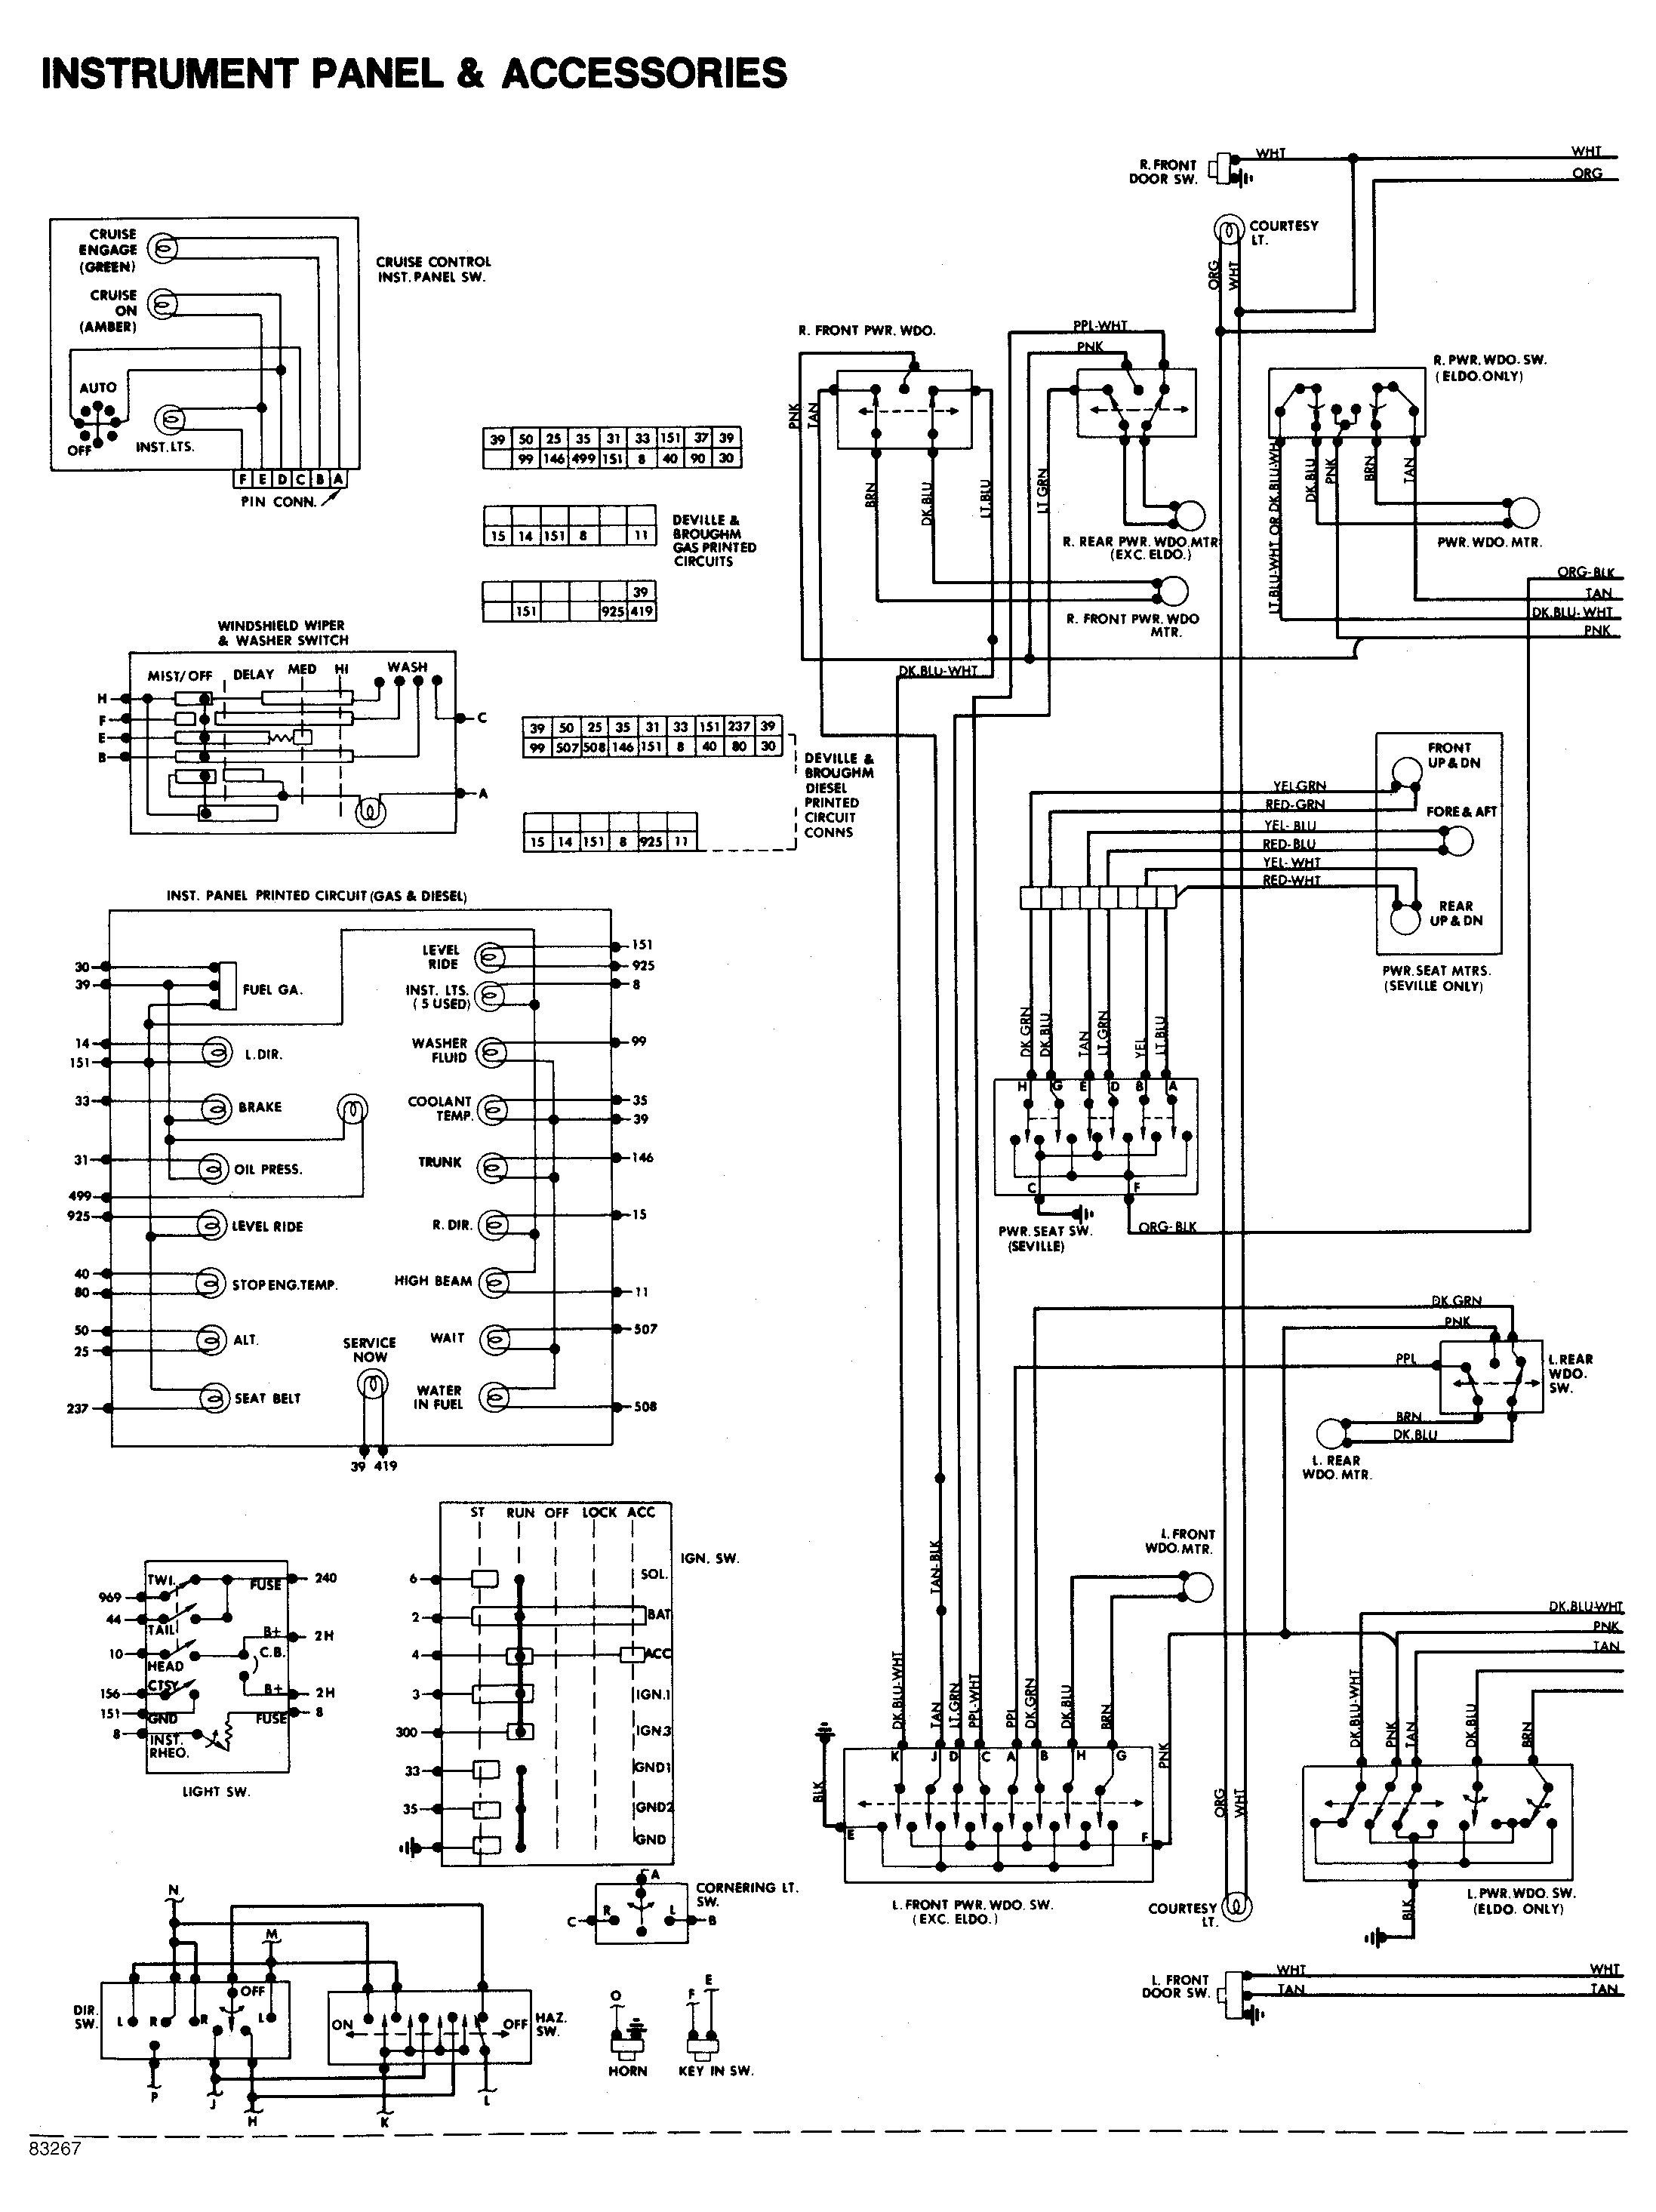 1999 Honda Civic Engine Diagram Honda Accord Schematics Wiring Diagram 500 Of 1999 Honda Civic Engine Diagram